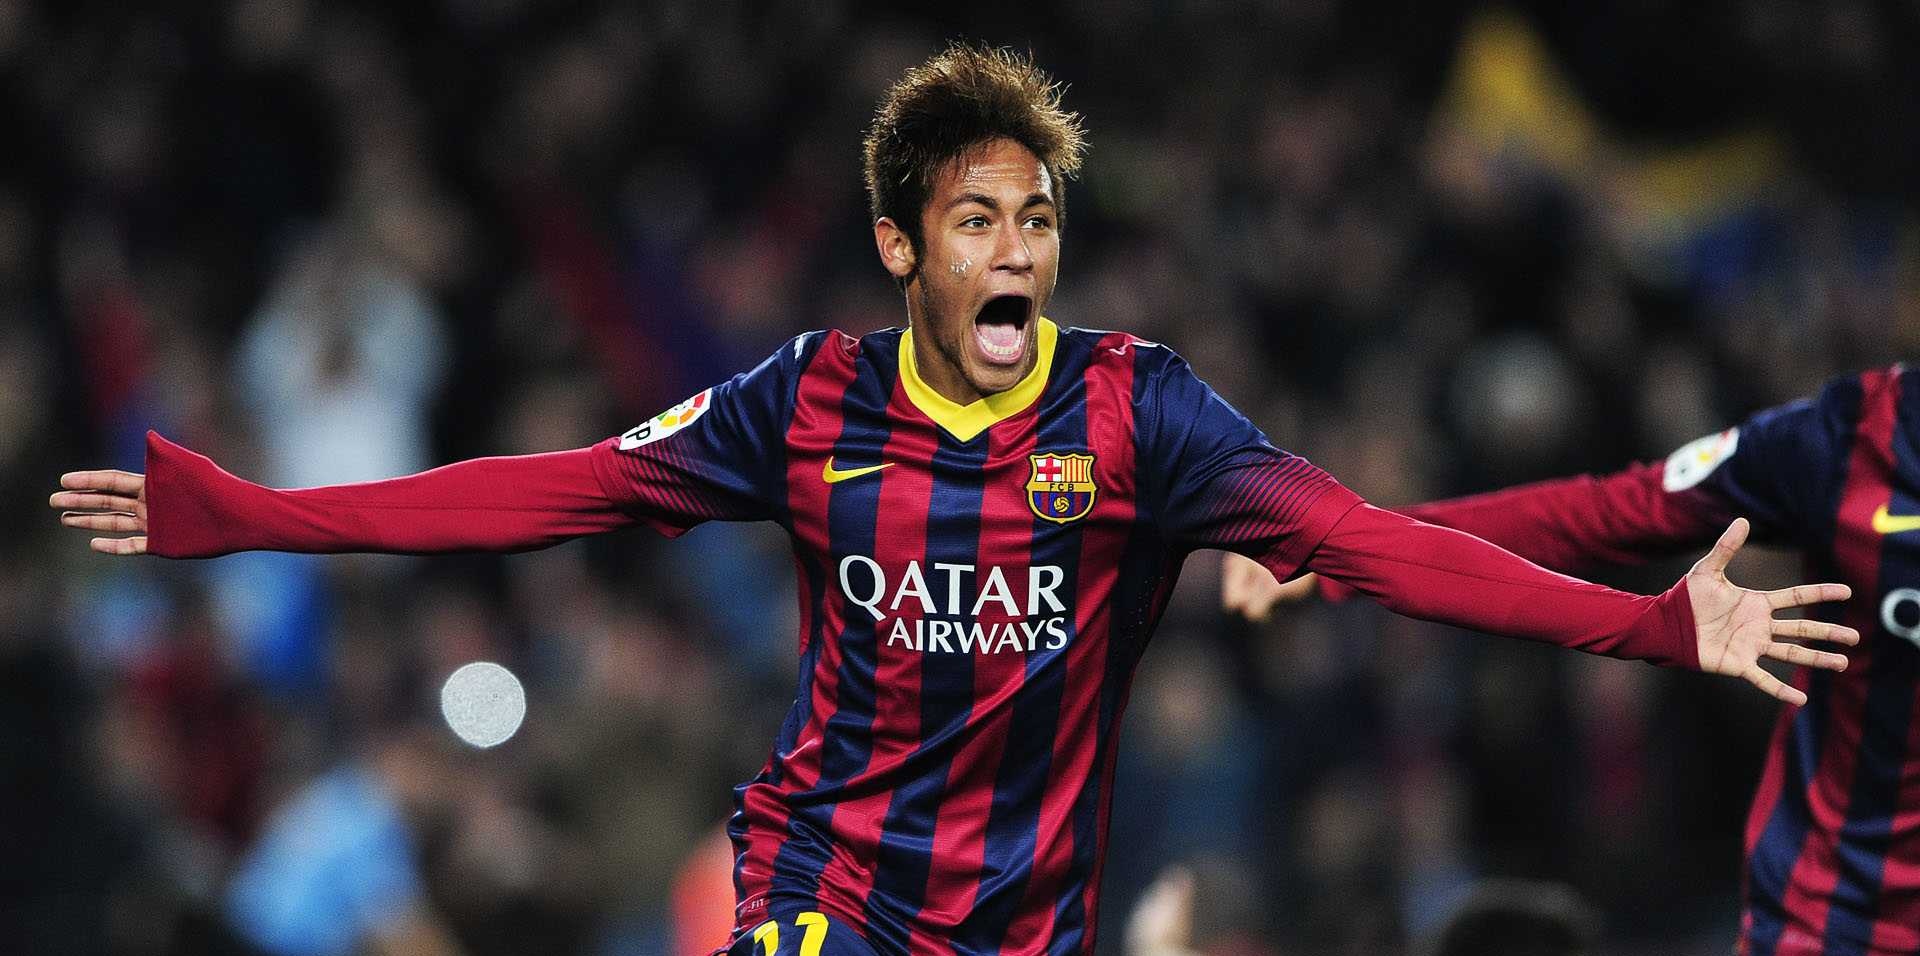 Neymar Football Soccer Player Hd Free Fantastic Goal Mobile Bakground Desktop Images